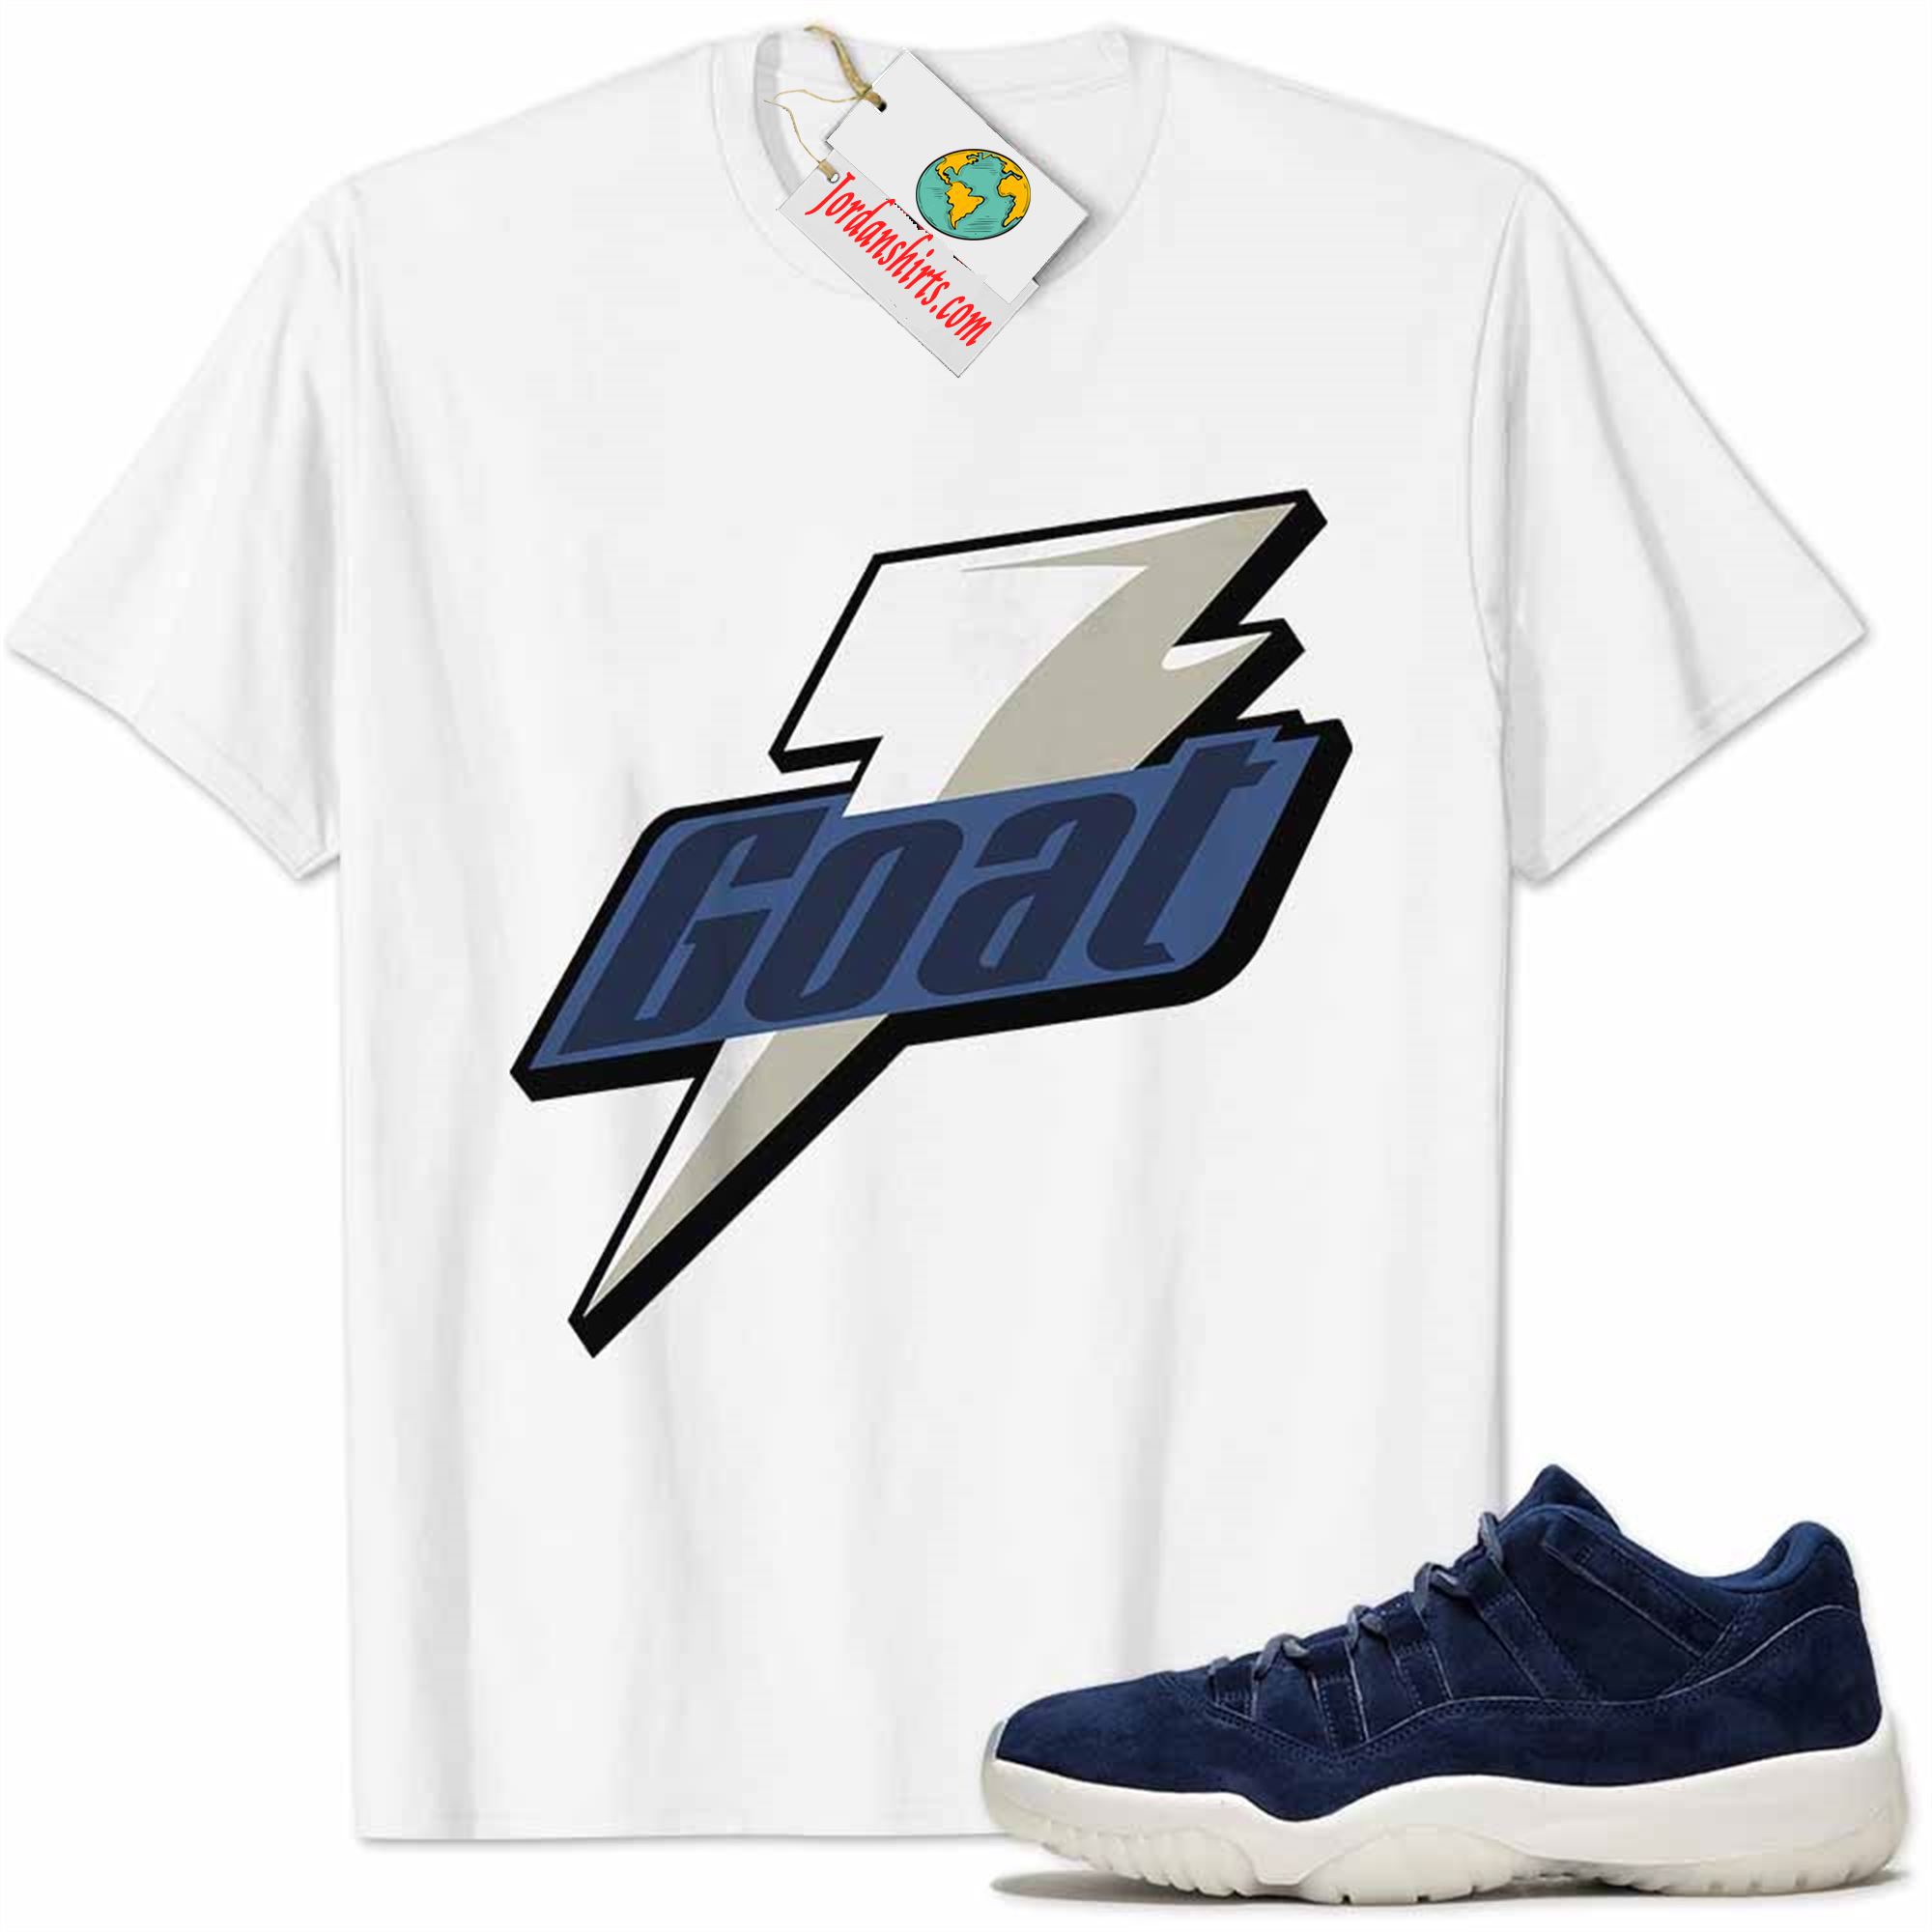 Jordan 11 Shirt, Derek Jeter 11s Shirt Goat Greatest Of All Time White Size Up To 5xl